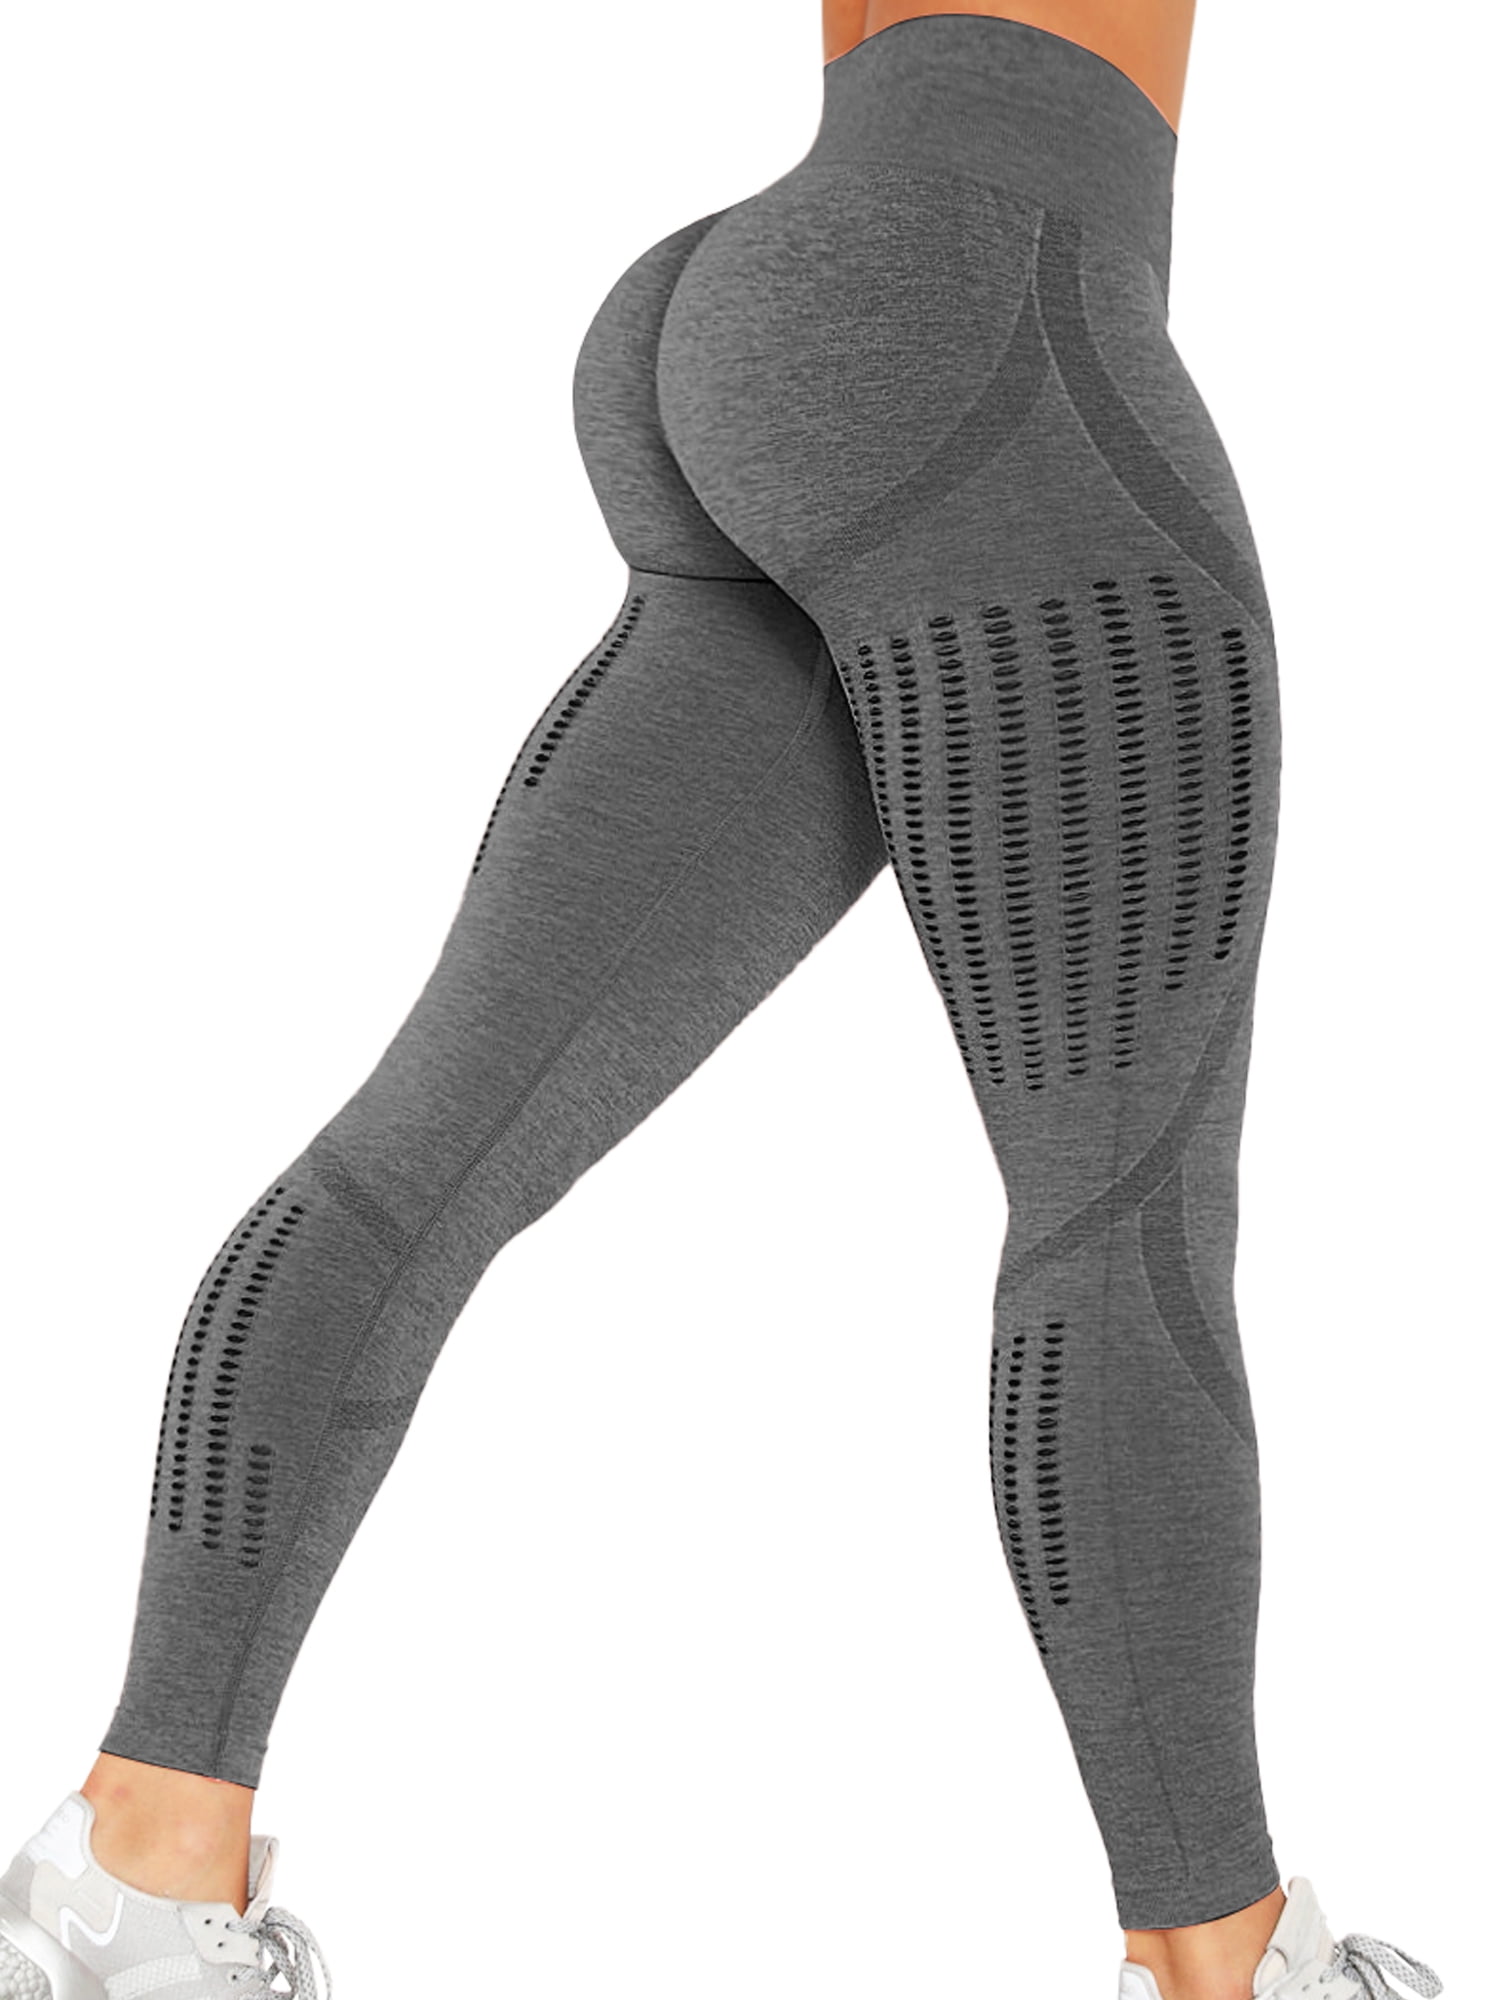 QRIC Women's High Waist Seamless Leggings Ankle Yoga Pants Squat